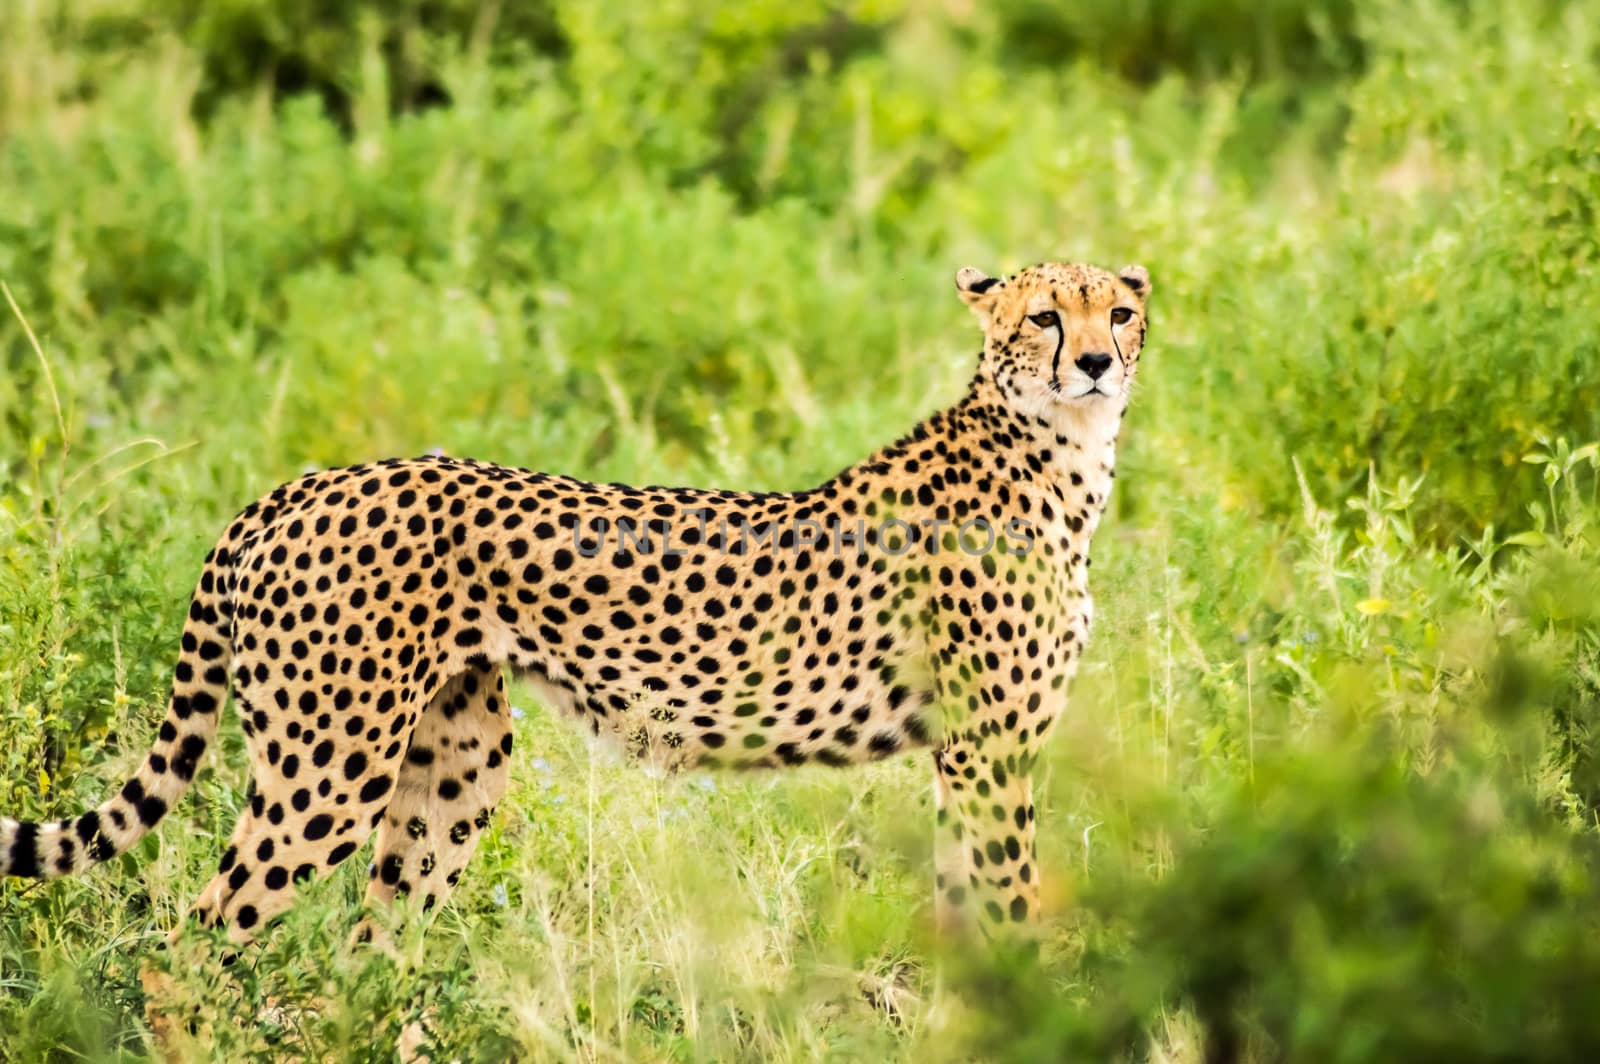 Cheetah walking in the savannah of Samburu Park in central Kenya